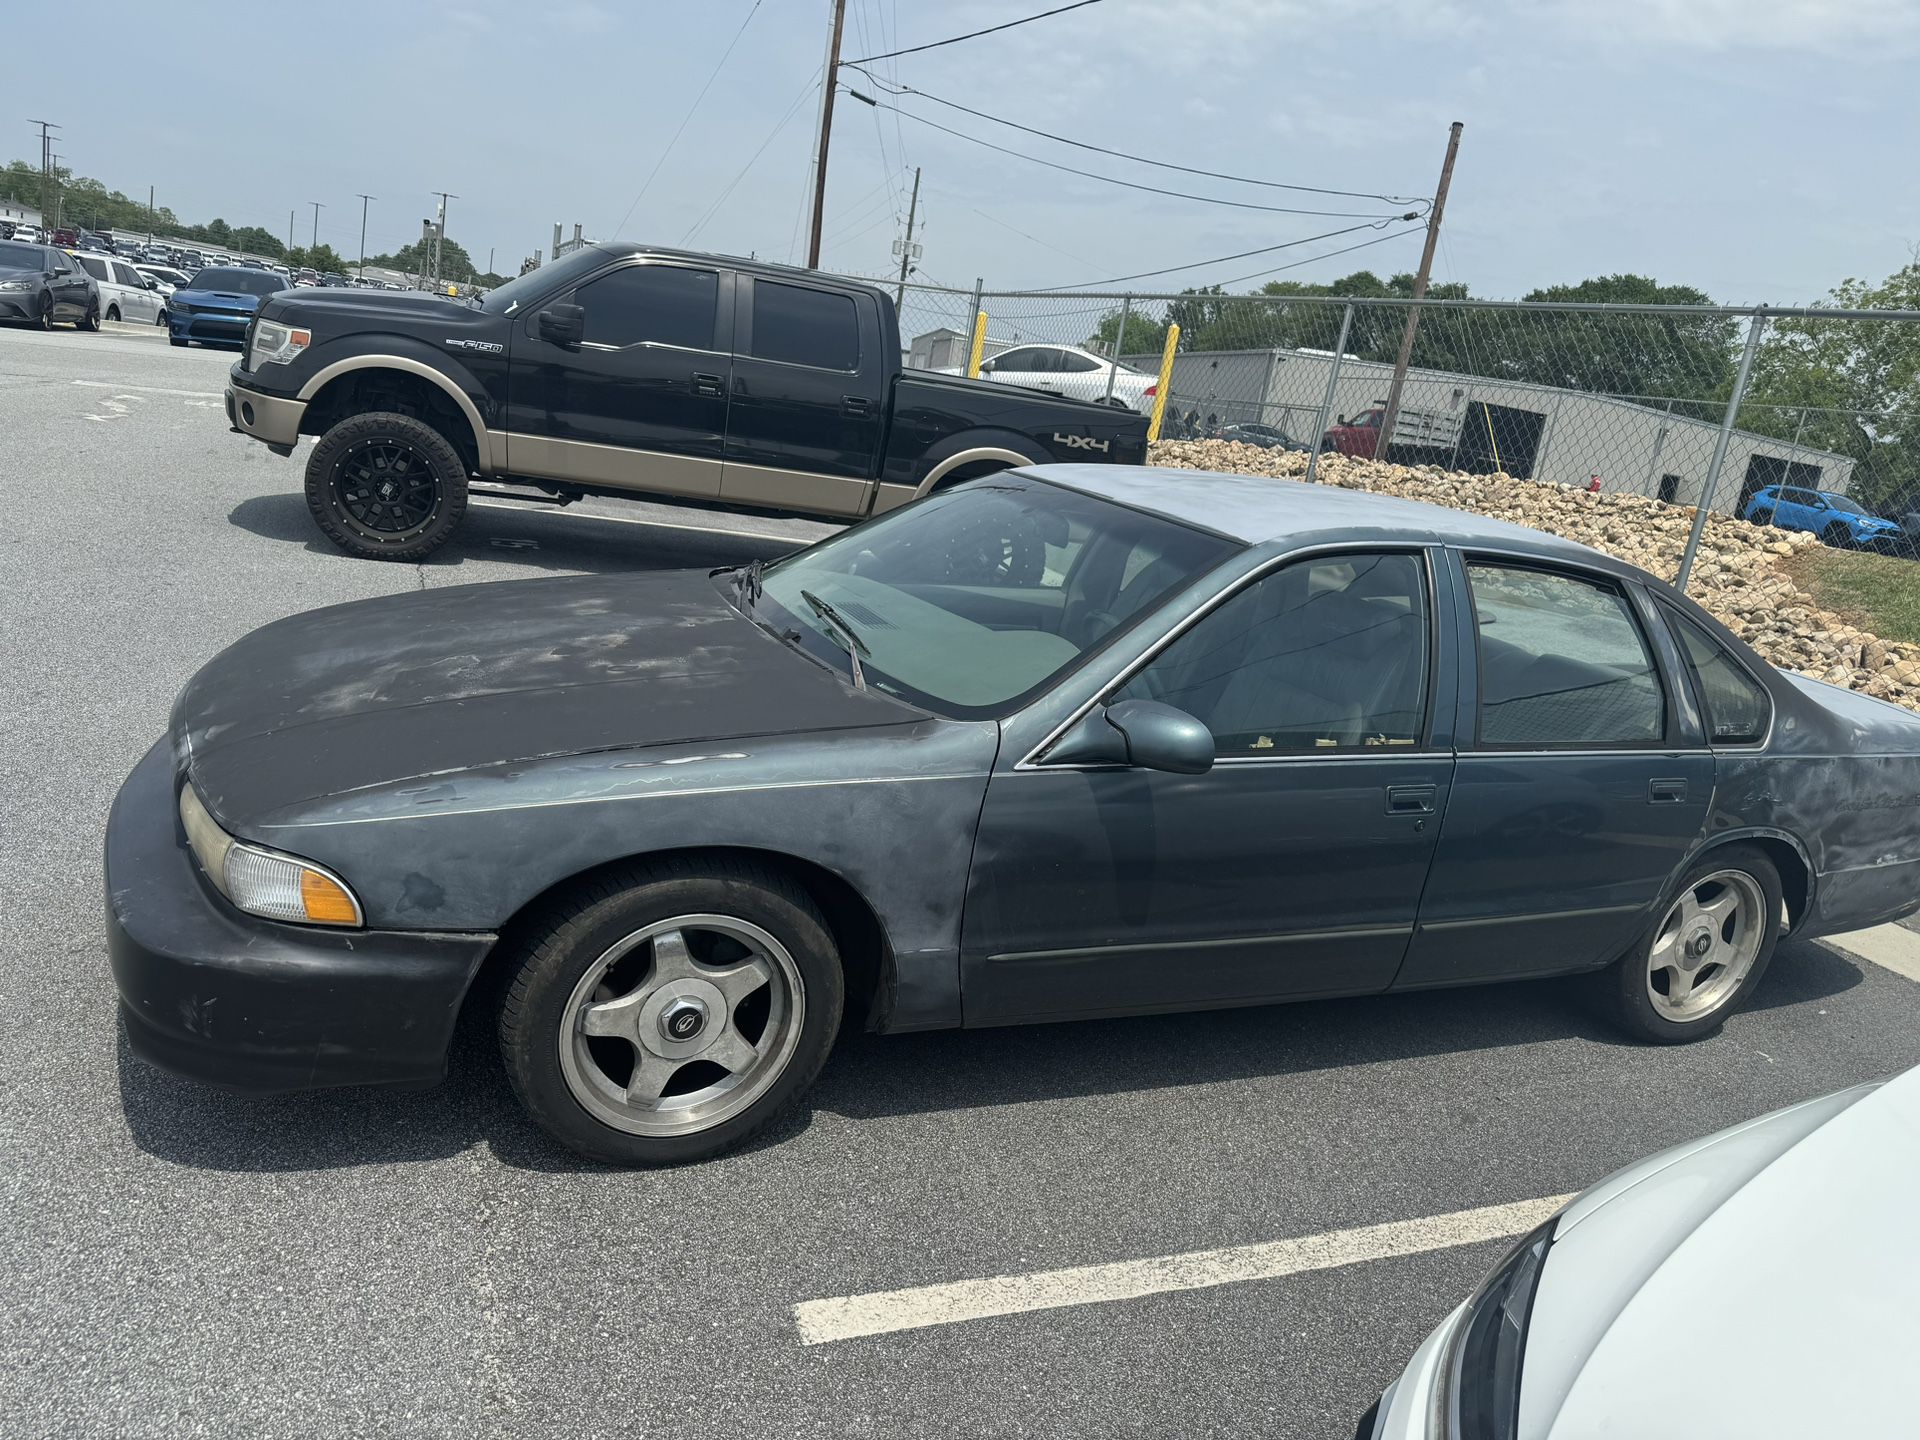 96 Impala Ss No Clone 